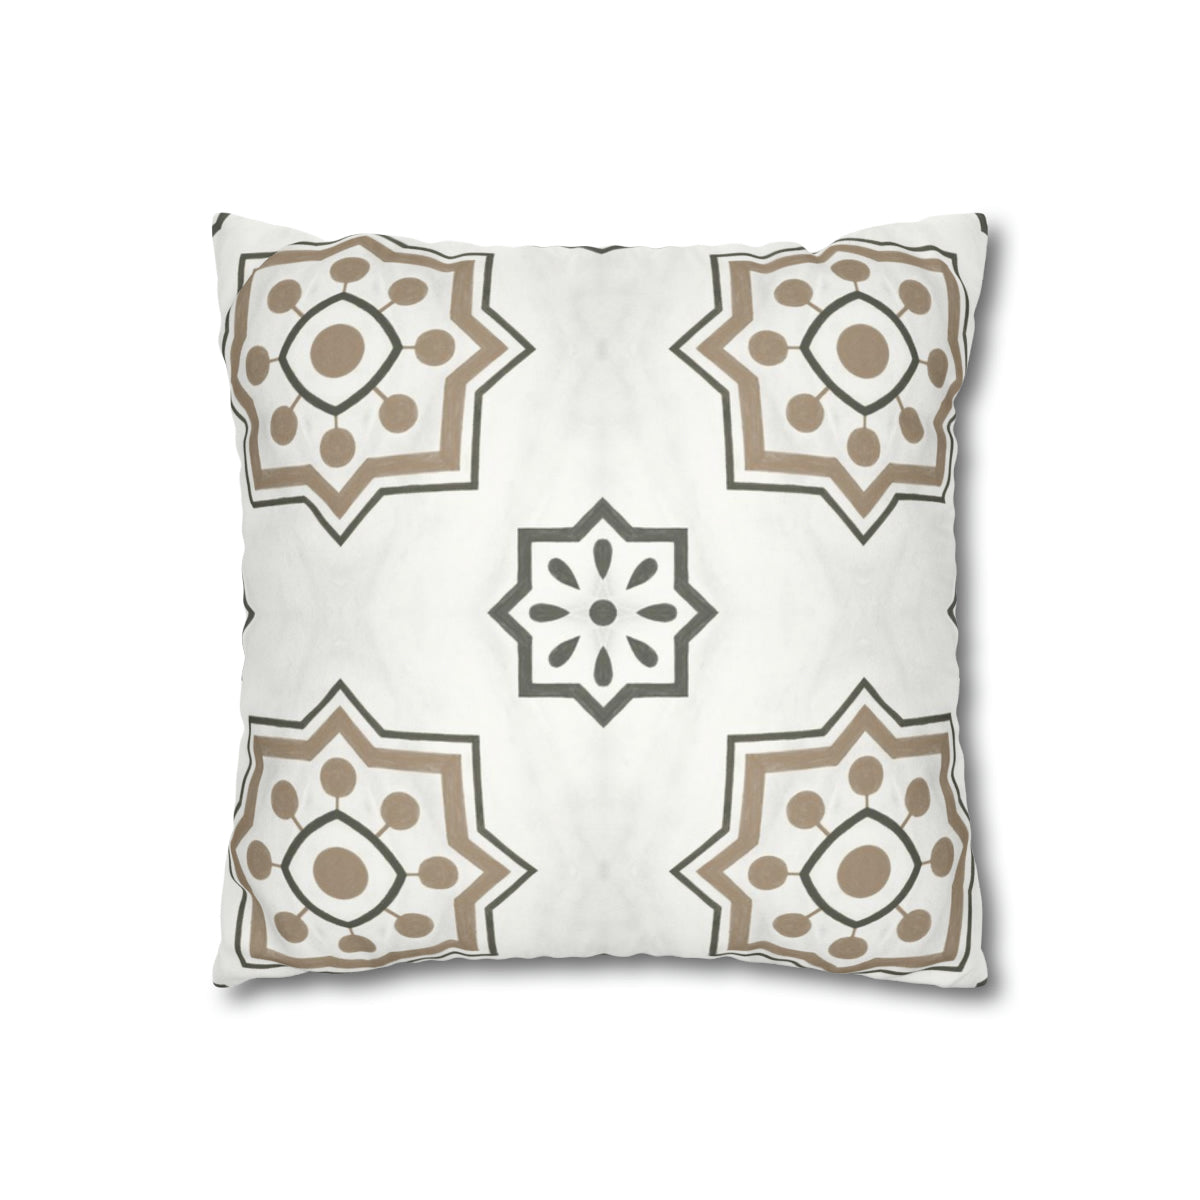 Atlas Microsuede Square Pillow Cover